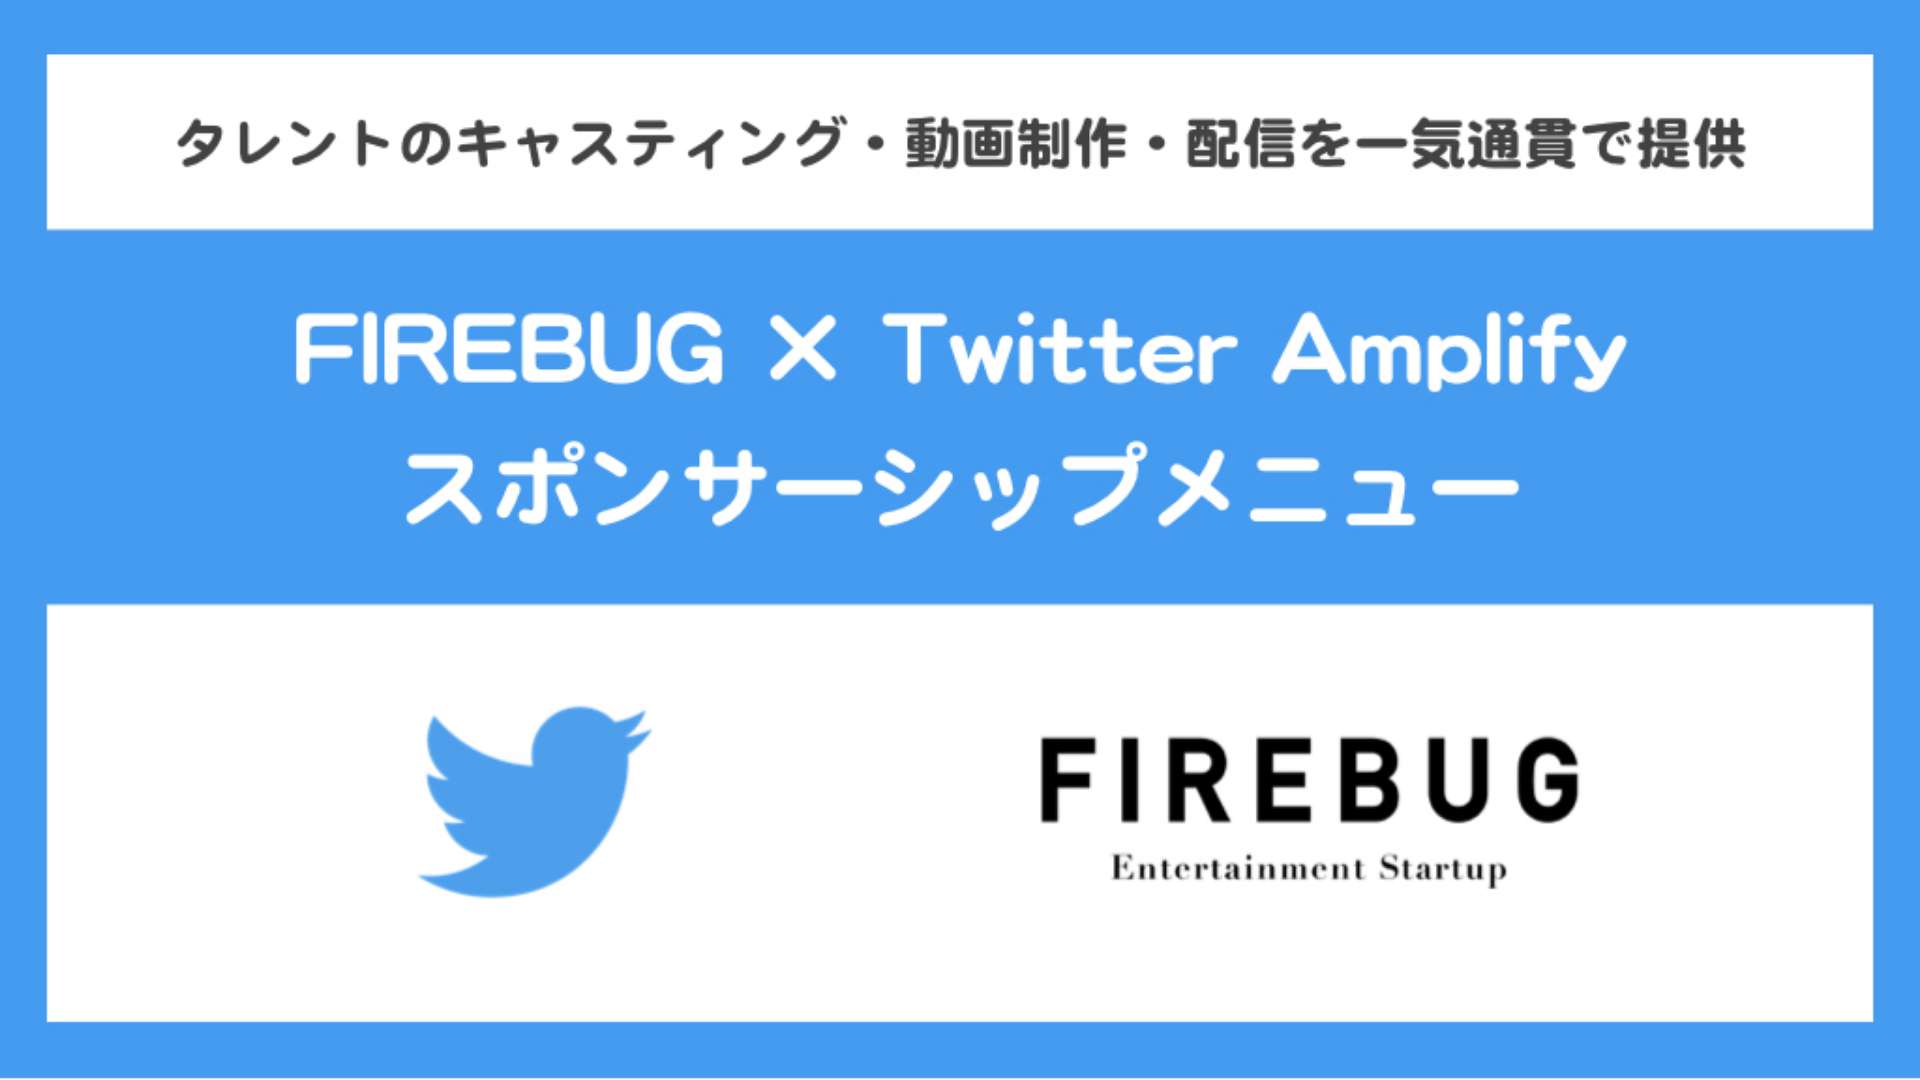 FIREBUG、Twitter Japan とコンテンツパートナー契約を締結　タレントのキャスティング・動画制作・配信を一気通貫で行う「FIREBUG × Twitter Amplify スポンサーシップメニュー」を販売開始